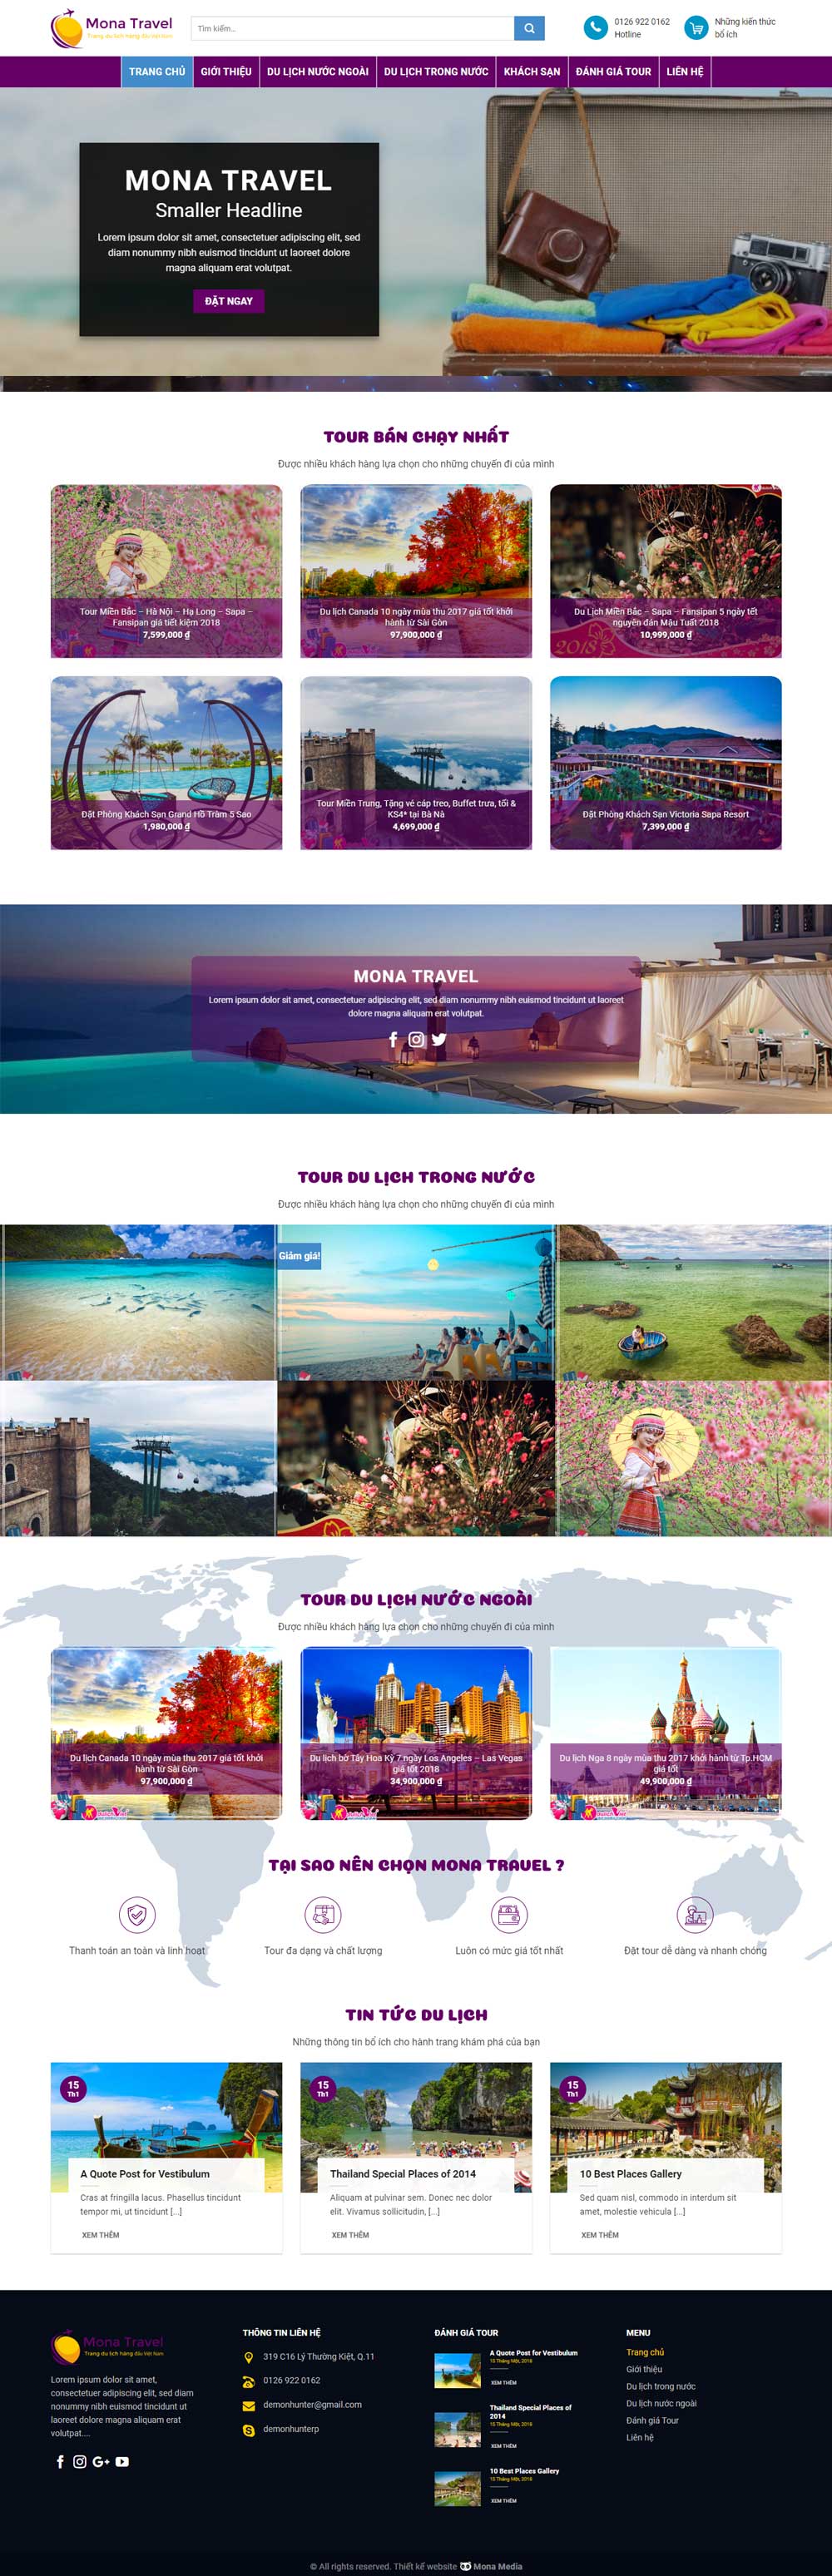 Mẫu website du lịch Tugo